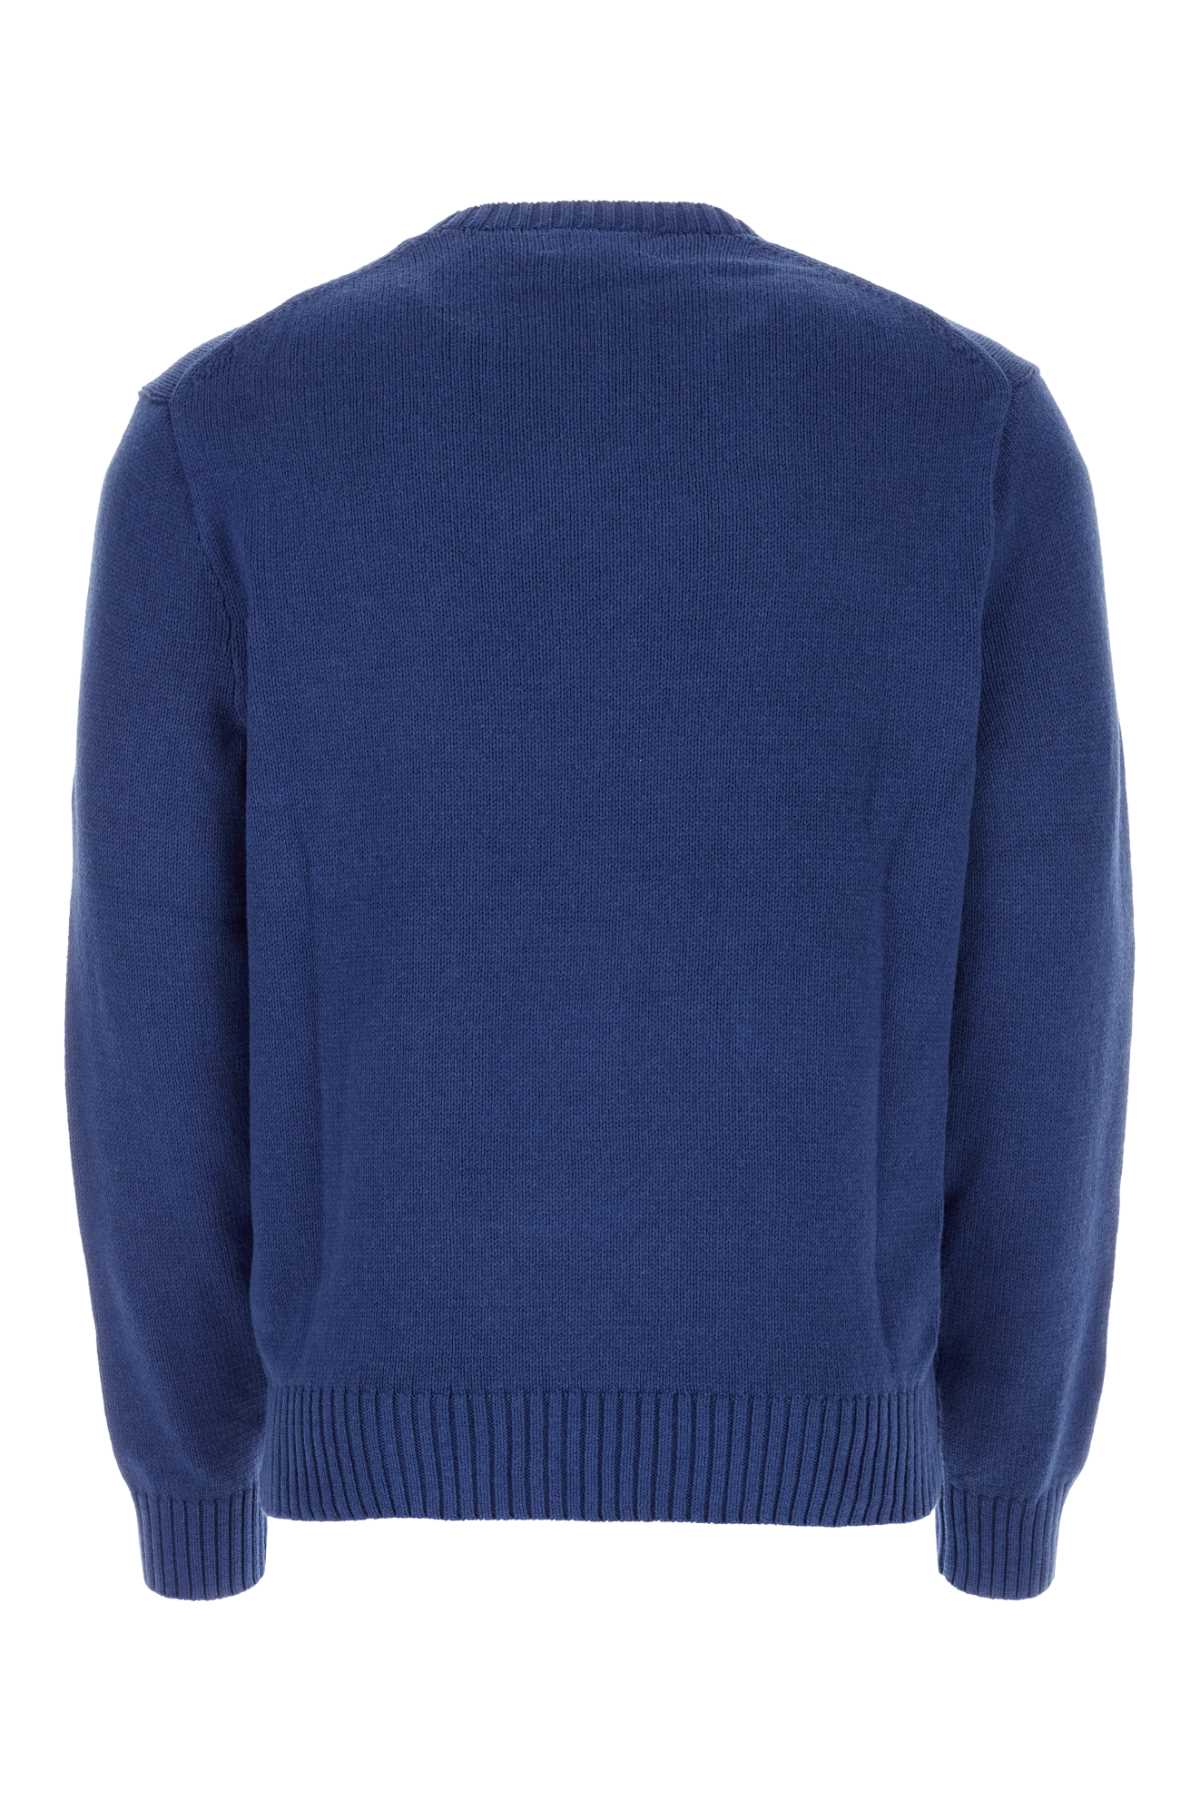 Polo Ralph Lauren Blue Cotton Sweater In Beachroyale